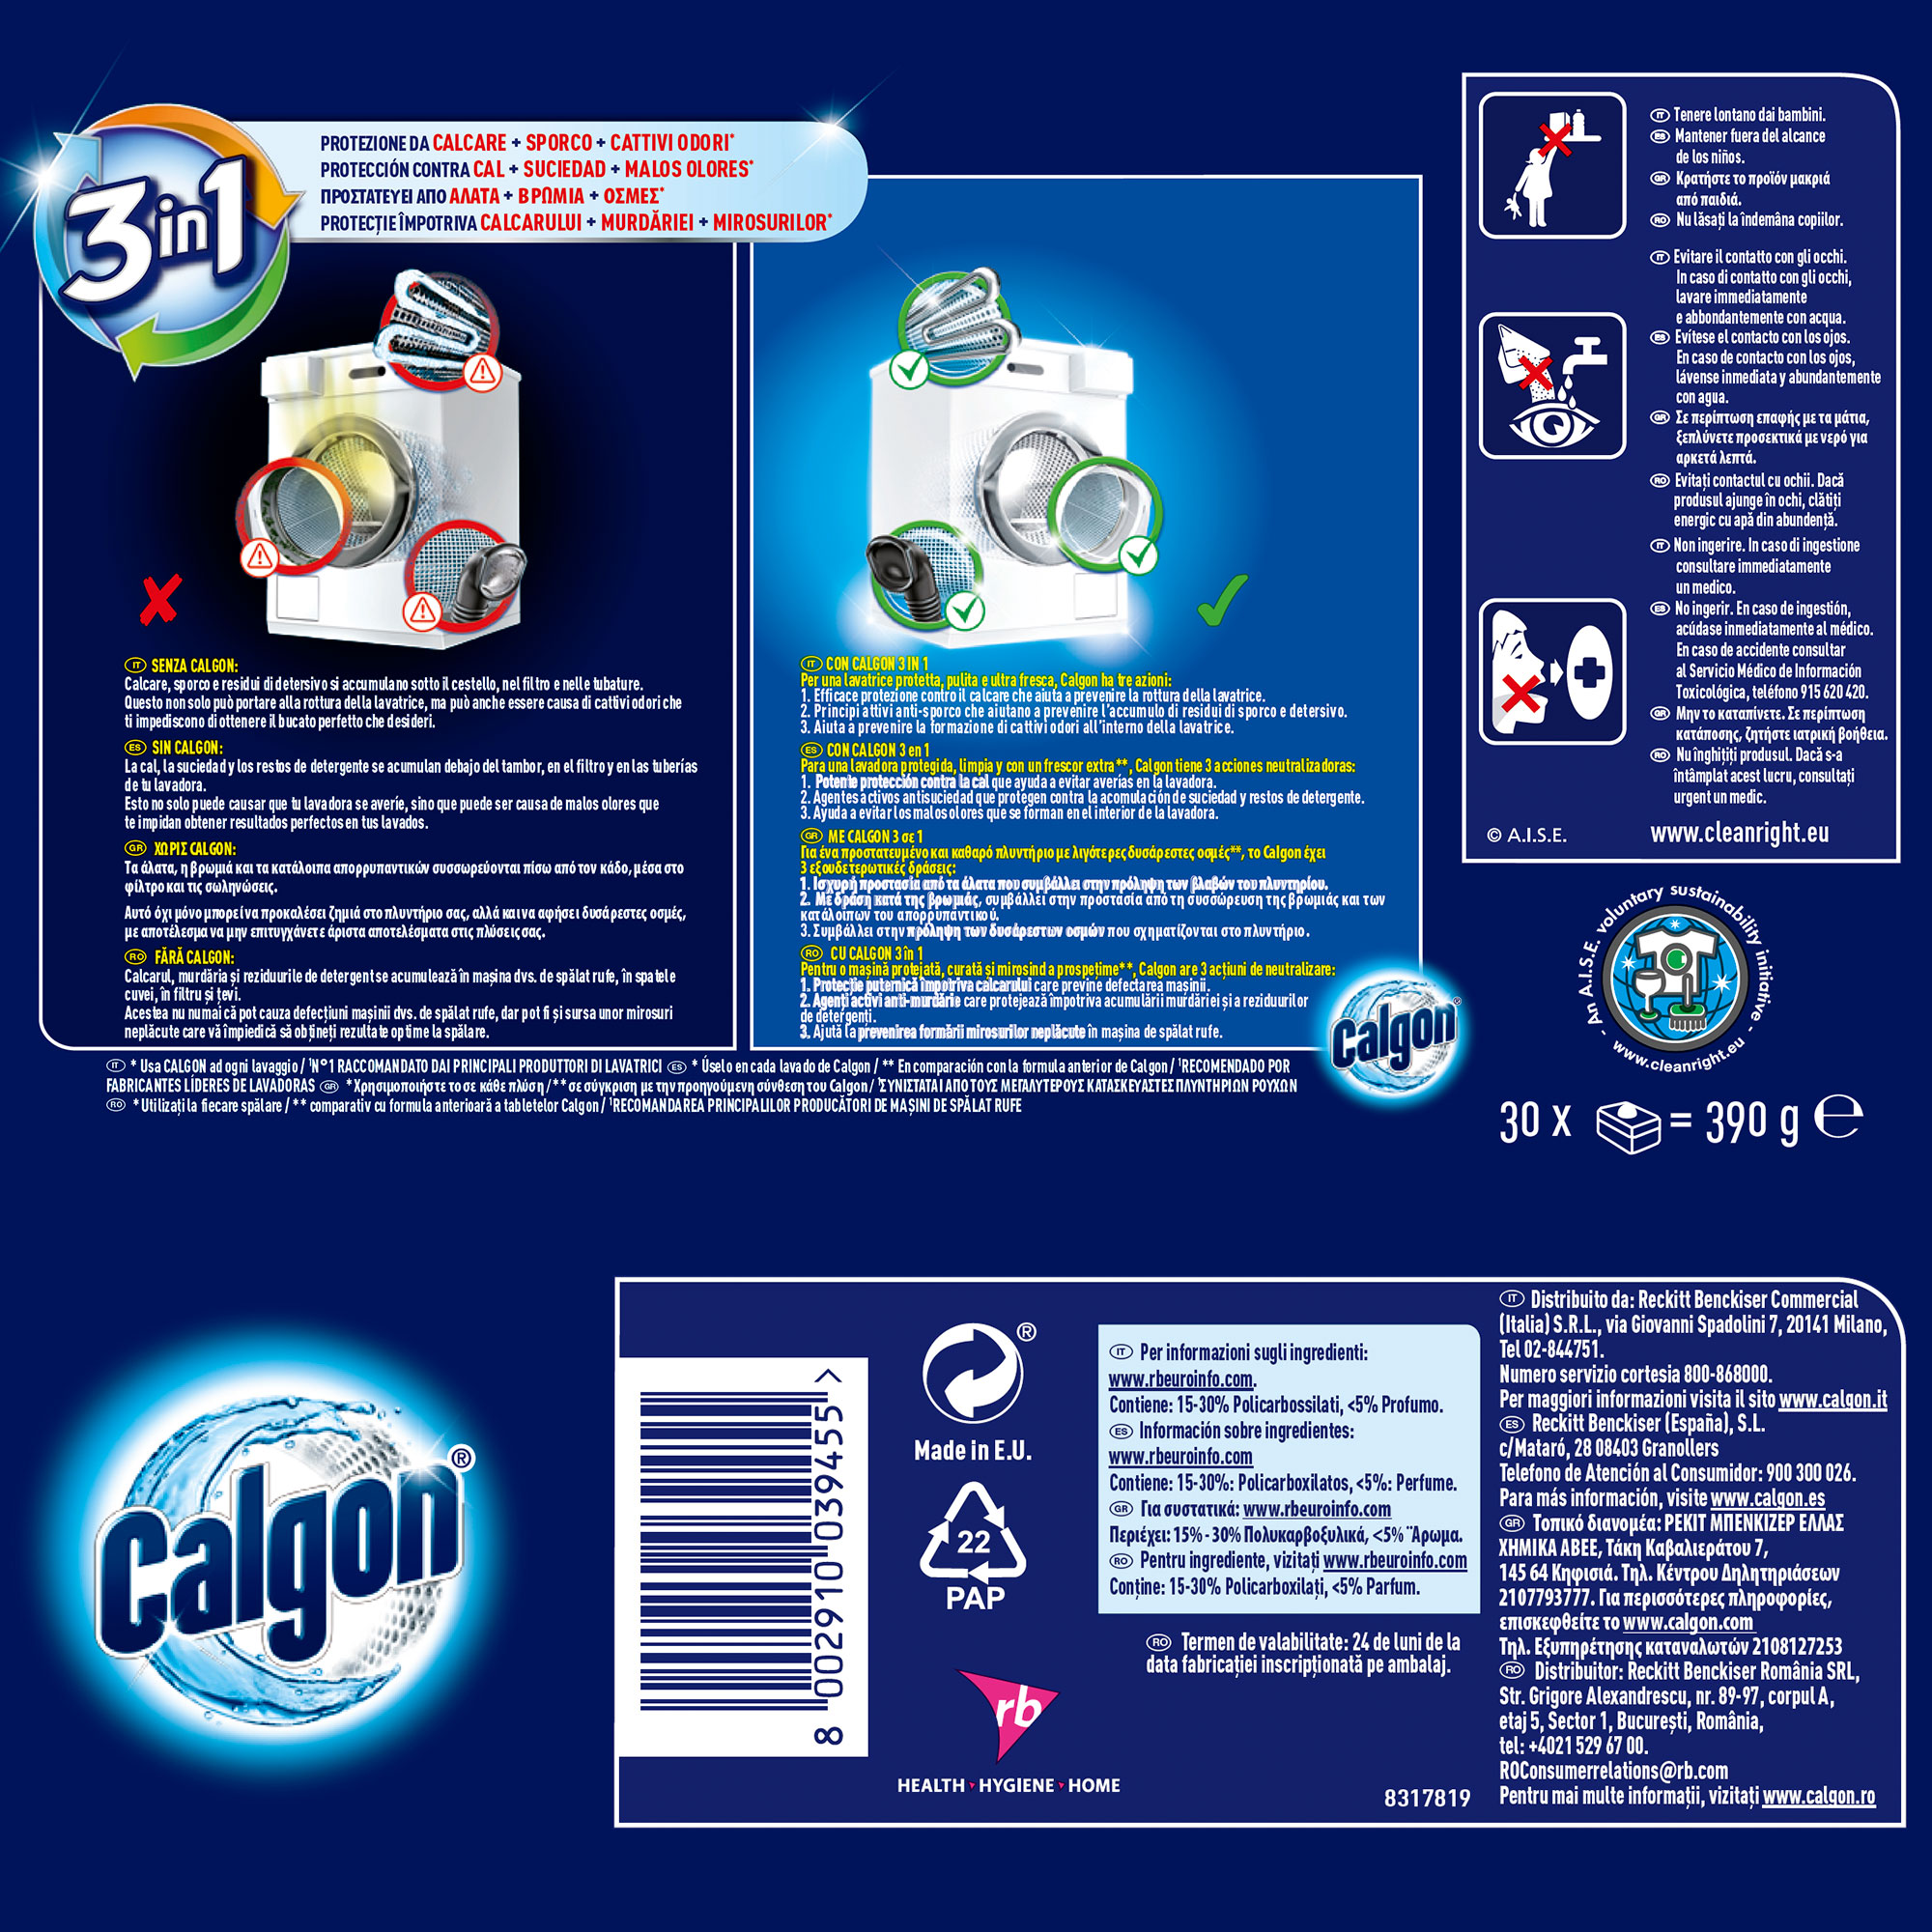 CALGON pastillas antical para lavadora 15 unidades